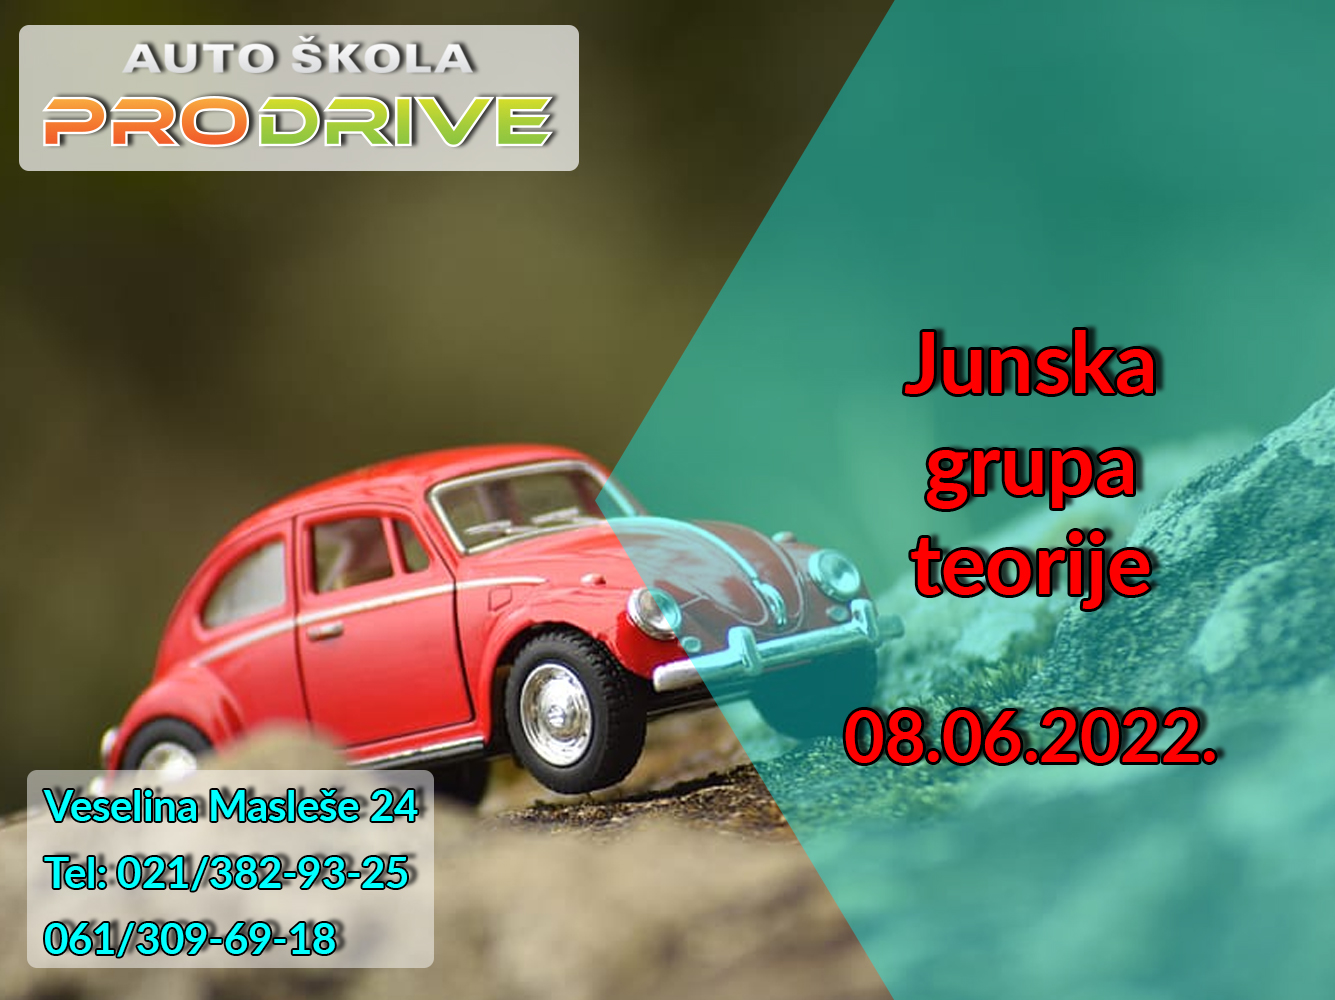 You are currently viewing Junska grupa teorijske obuke